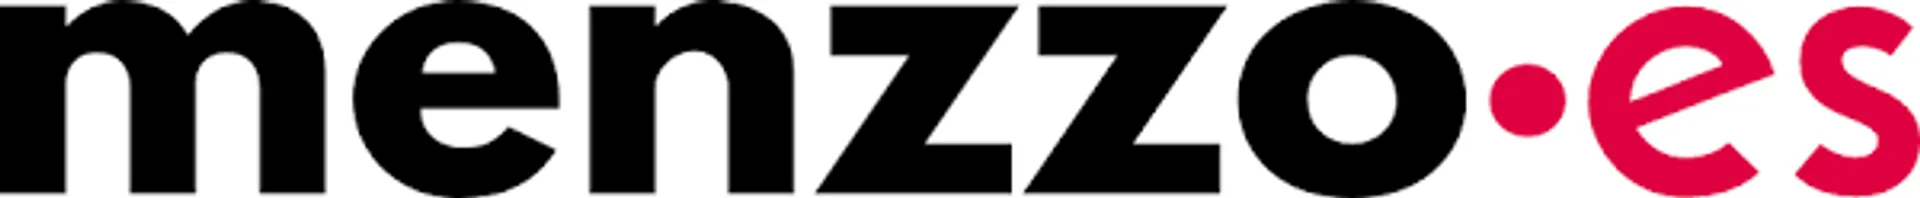 MUEBLES MENZZO logo